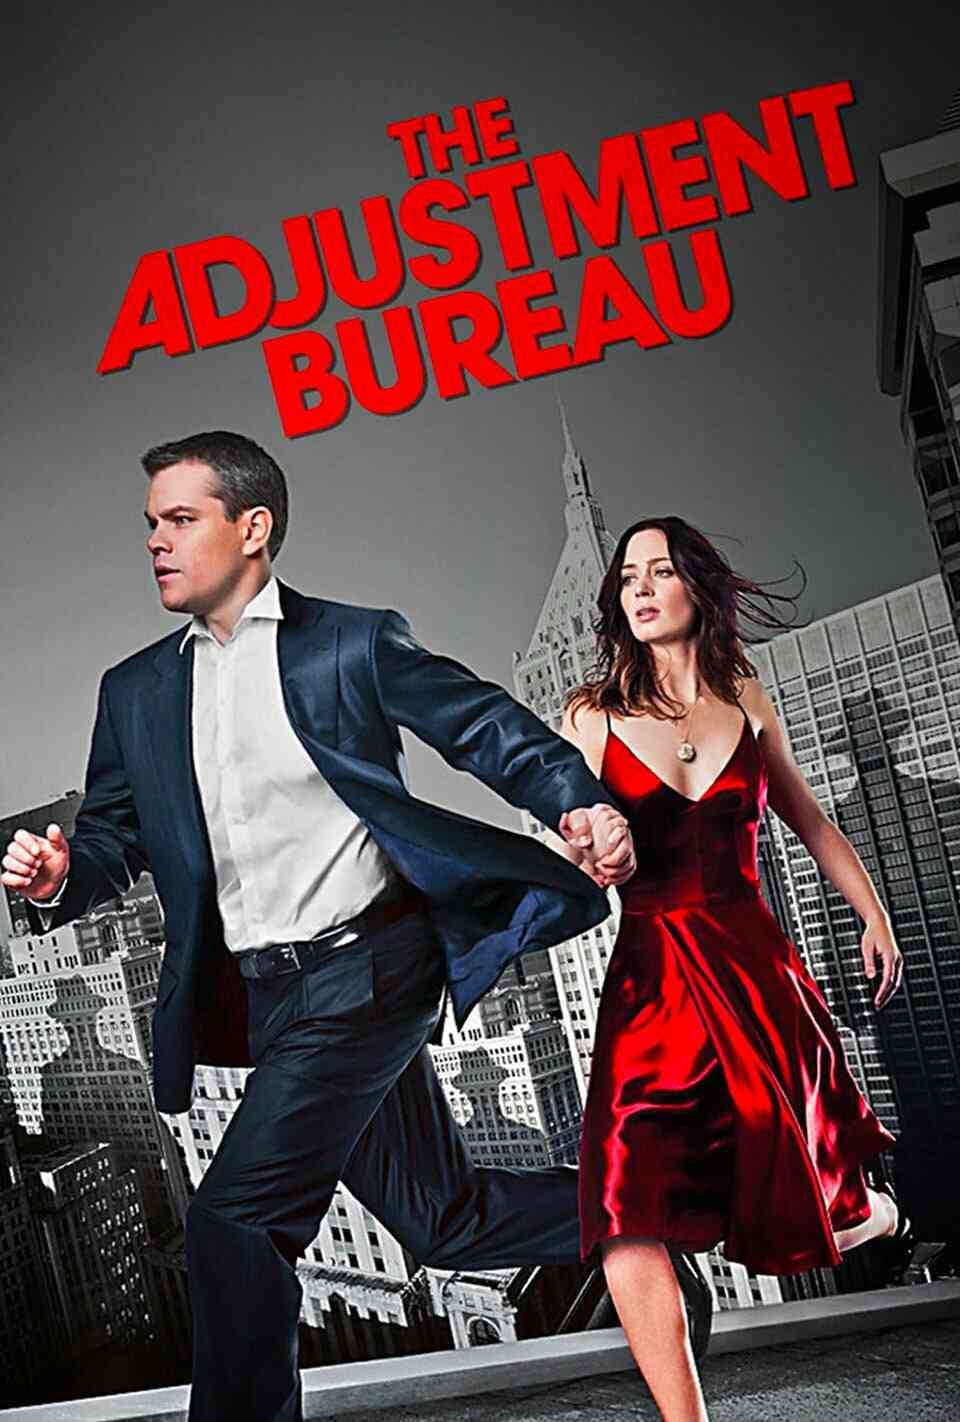 Read The Adjustment Bureau screenplay (poster)